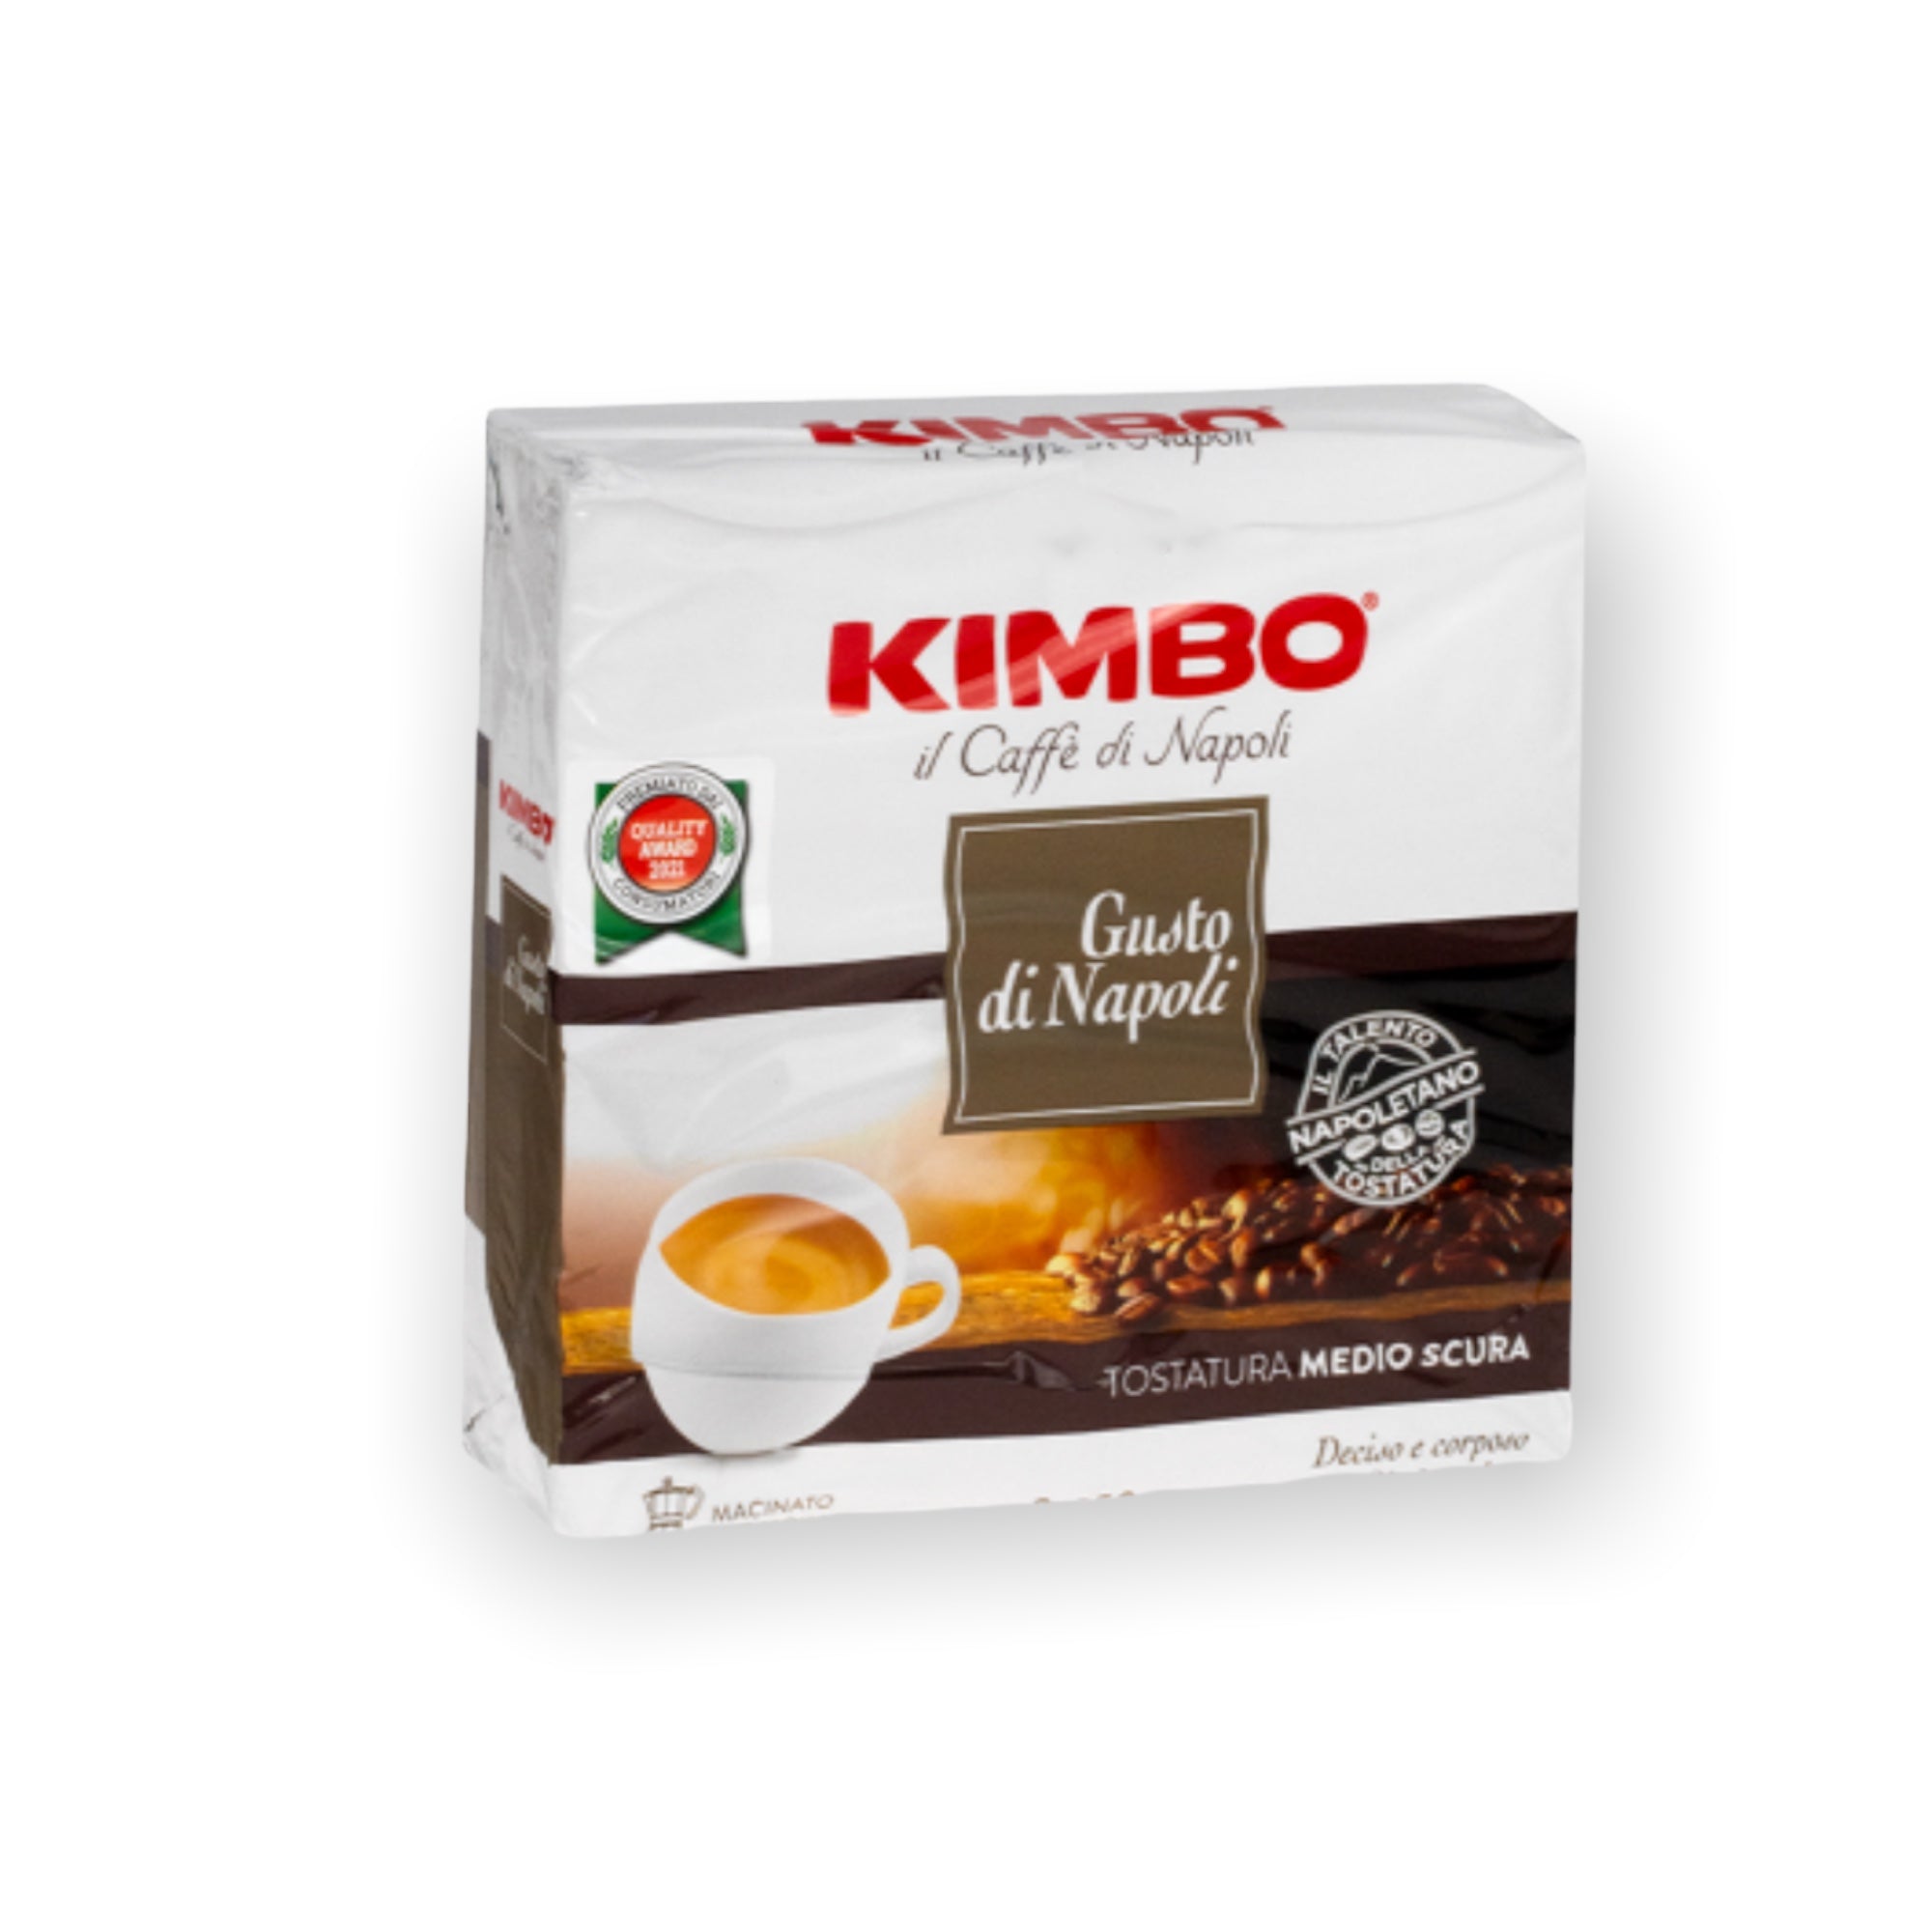  Kimbo Espresso Pods Cialde Espresso - 18 in a Box : Grocery &  Gourmet Food